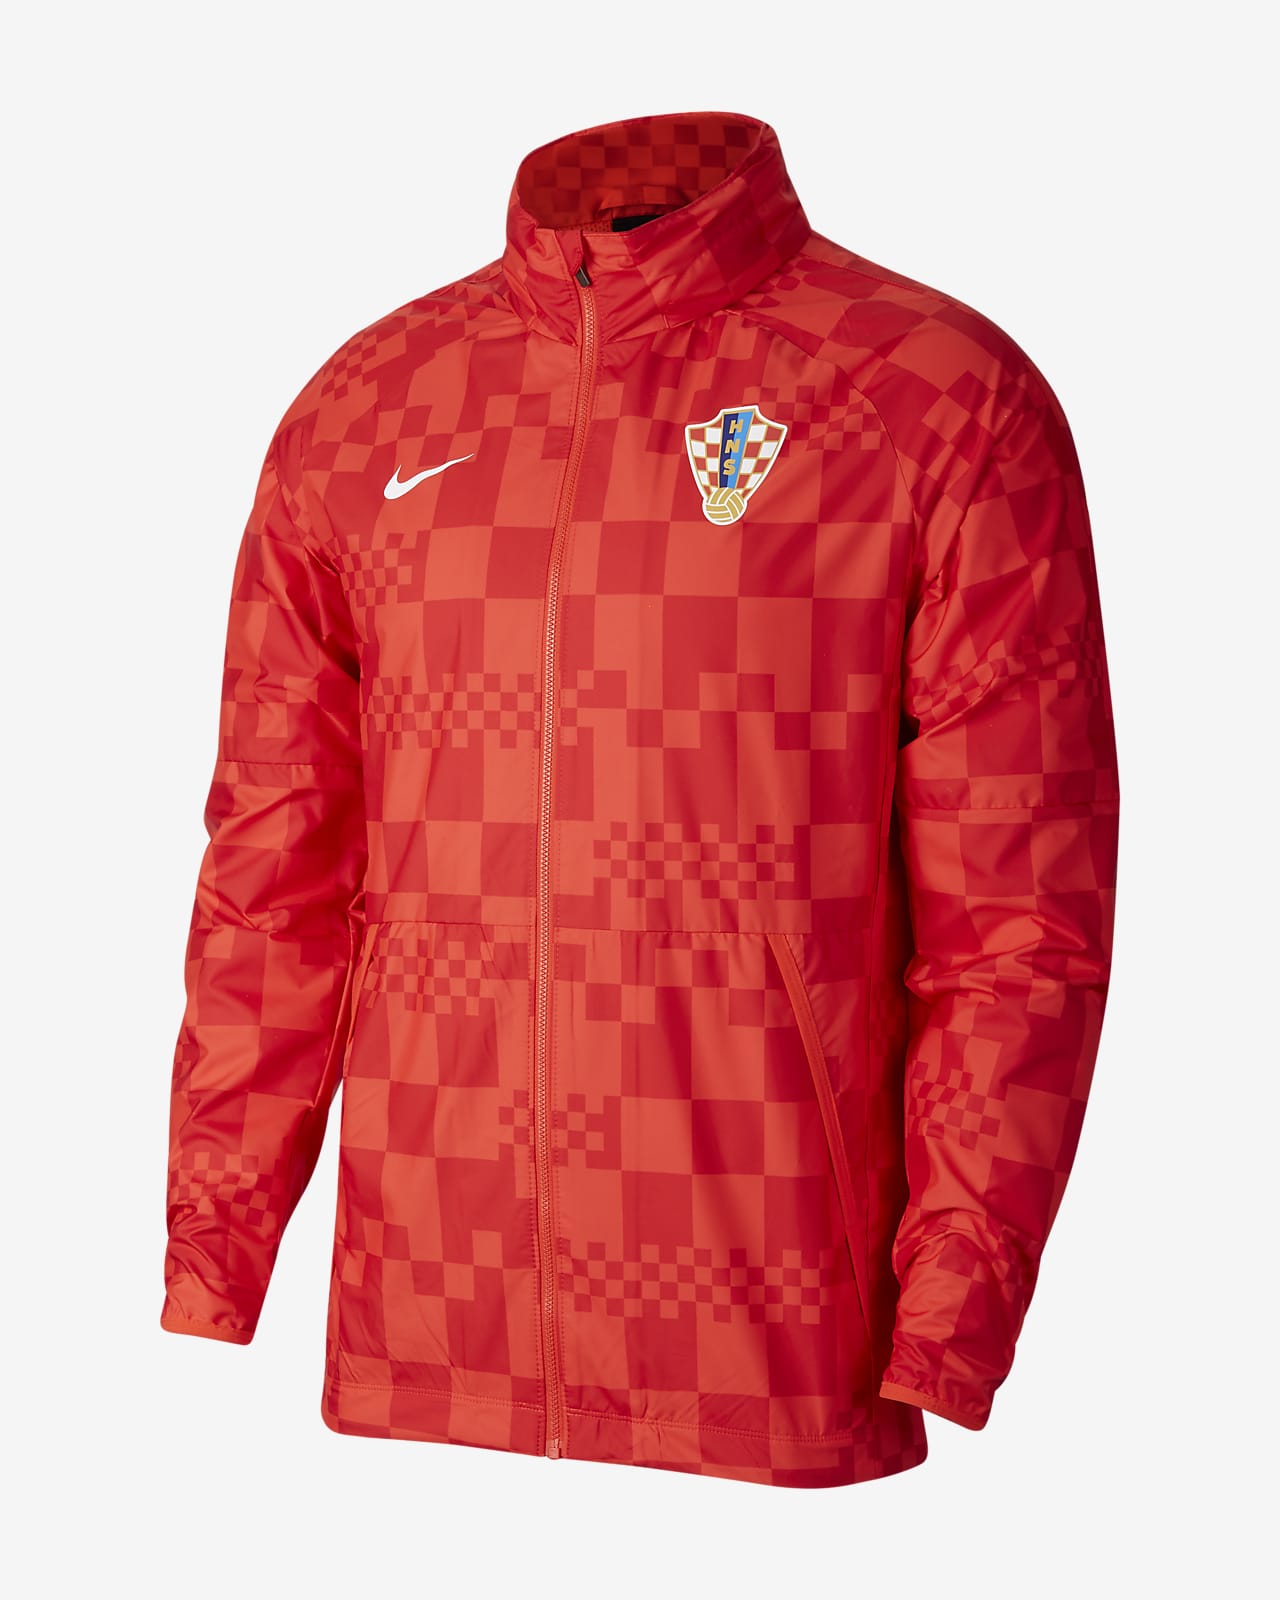 croatia jacket nike